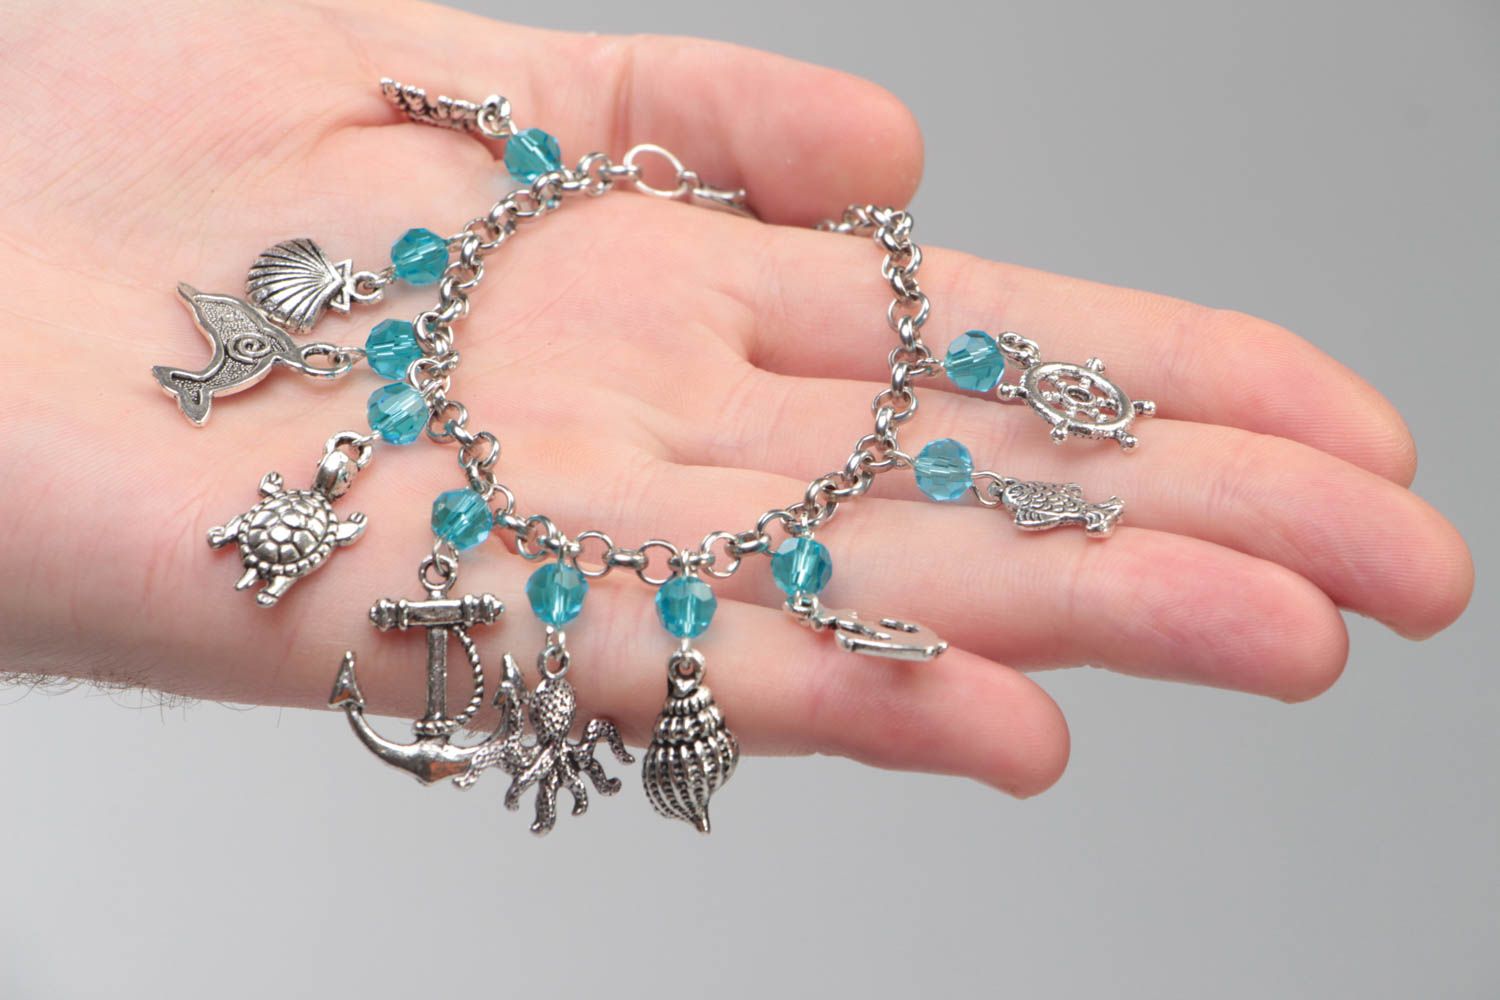 Handmade crystal bracelet accessory with metal charms stylish designer jewelry photo 5